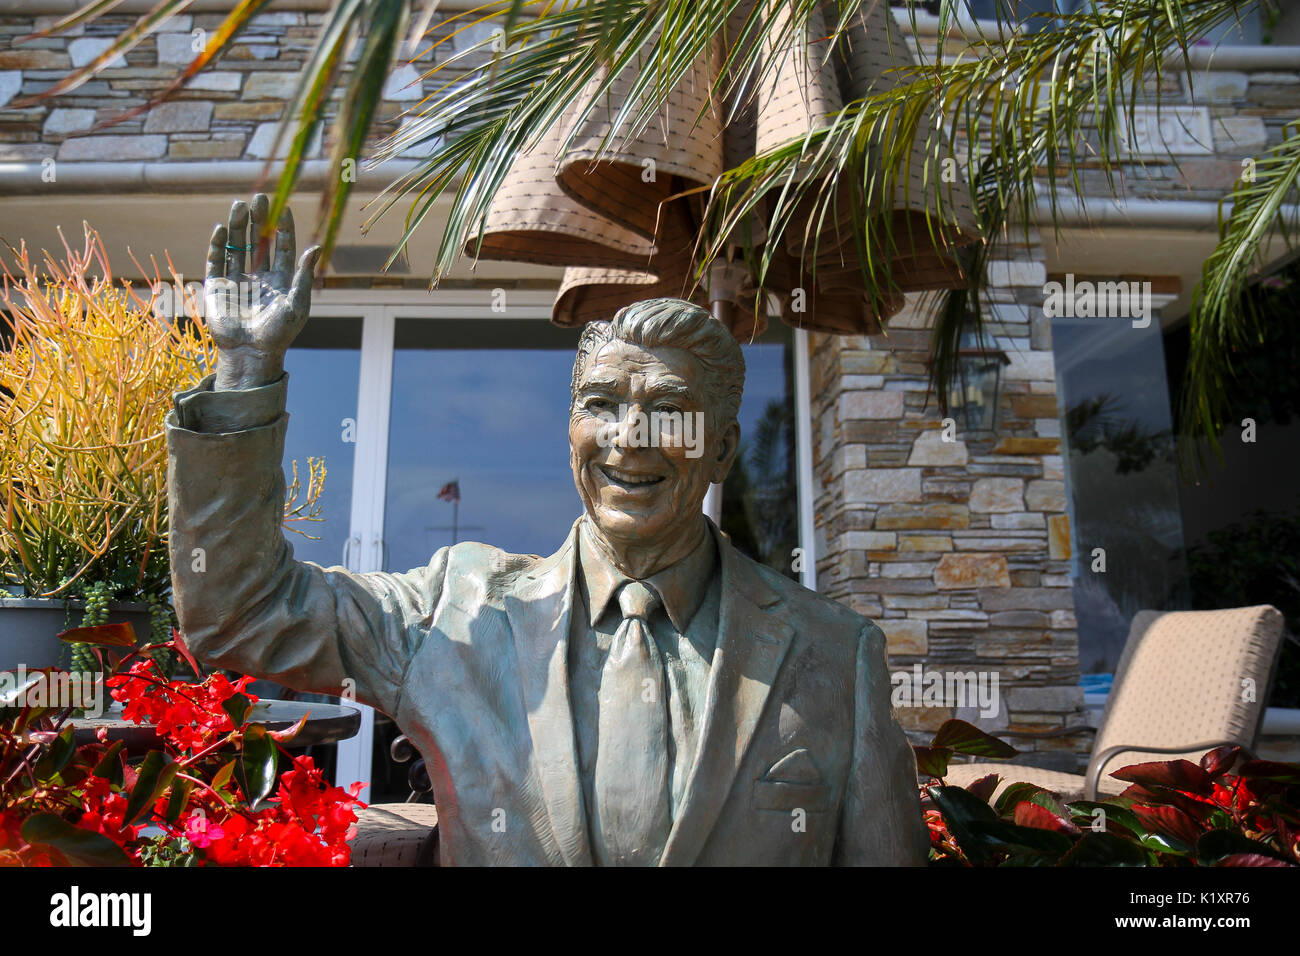 Ronald Reagan sculpture, Balboa Island, Newport Beach, Orange County, California, United States. Editorial use only. Stock Photo